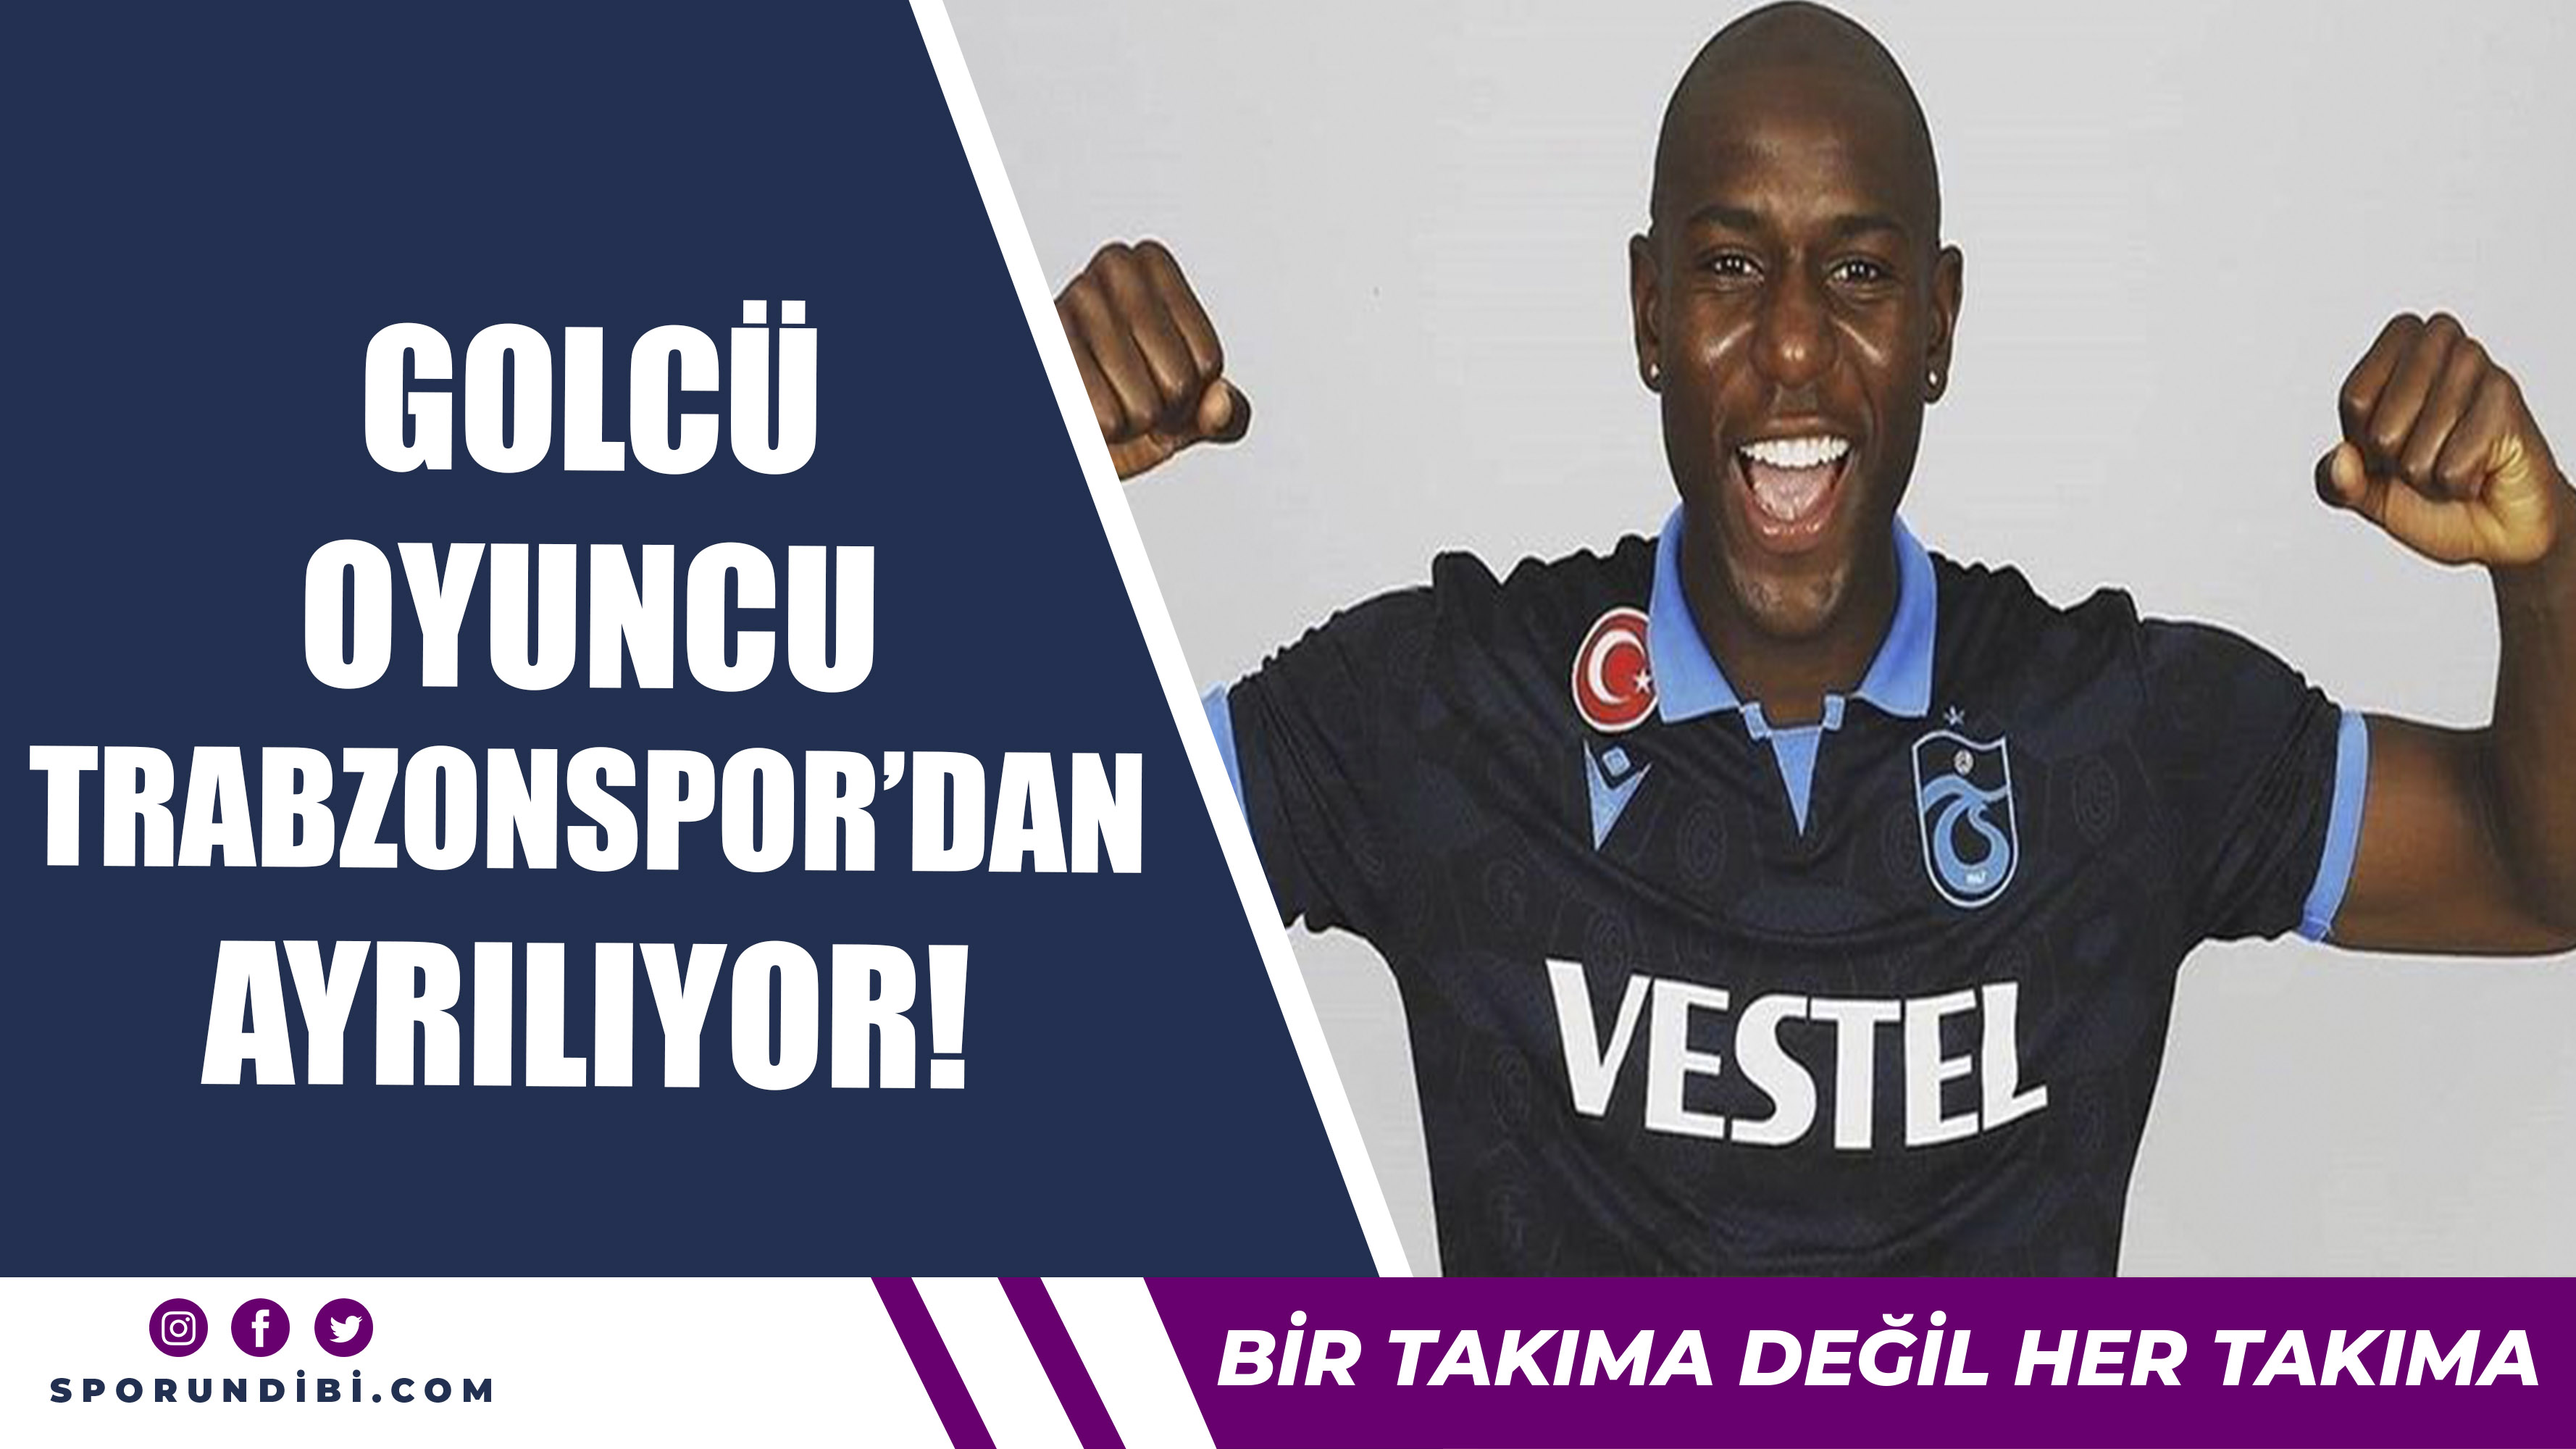 Trabzonspor'un Golcüsü Takımdan Ayrılıyor!